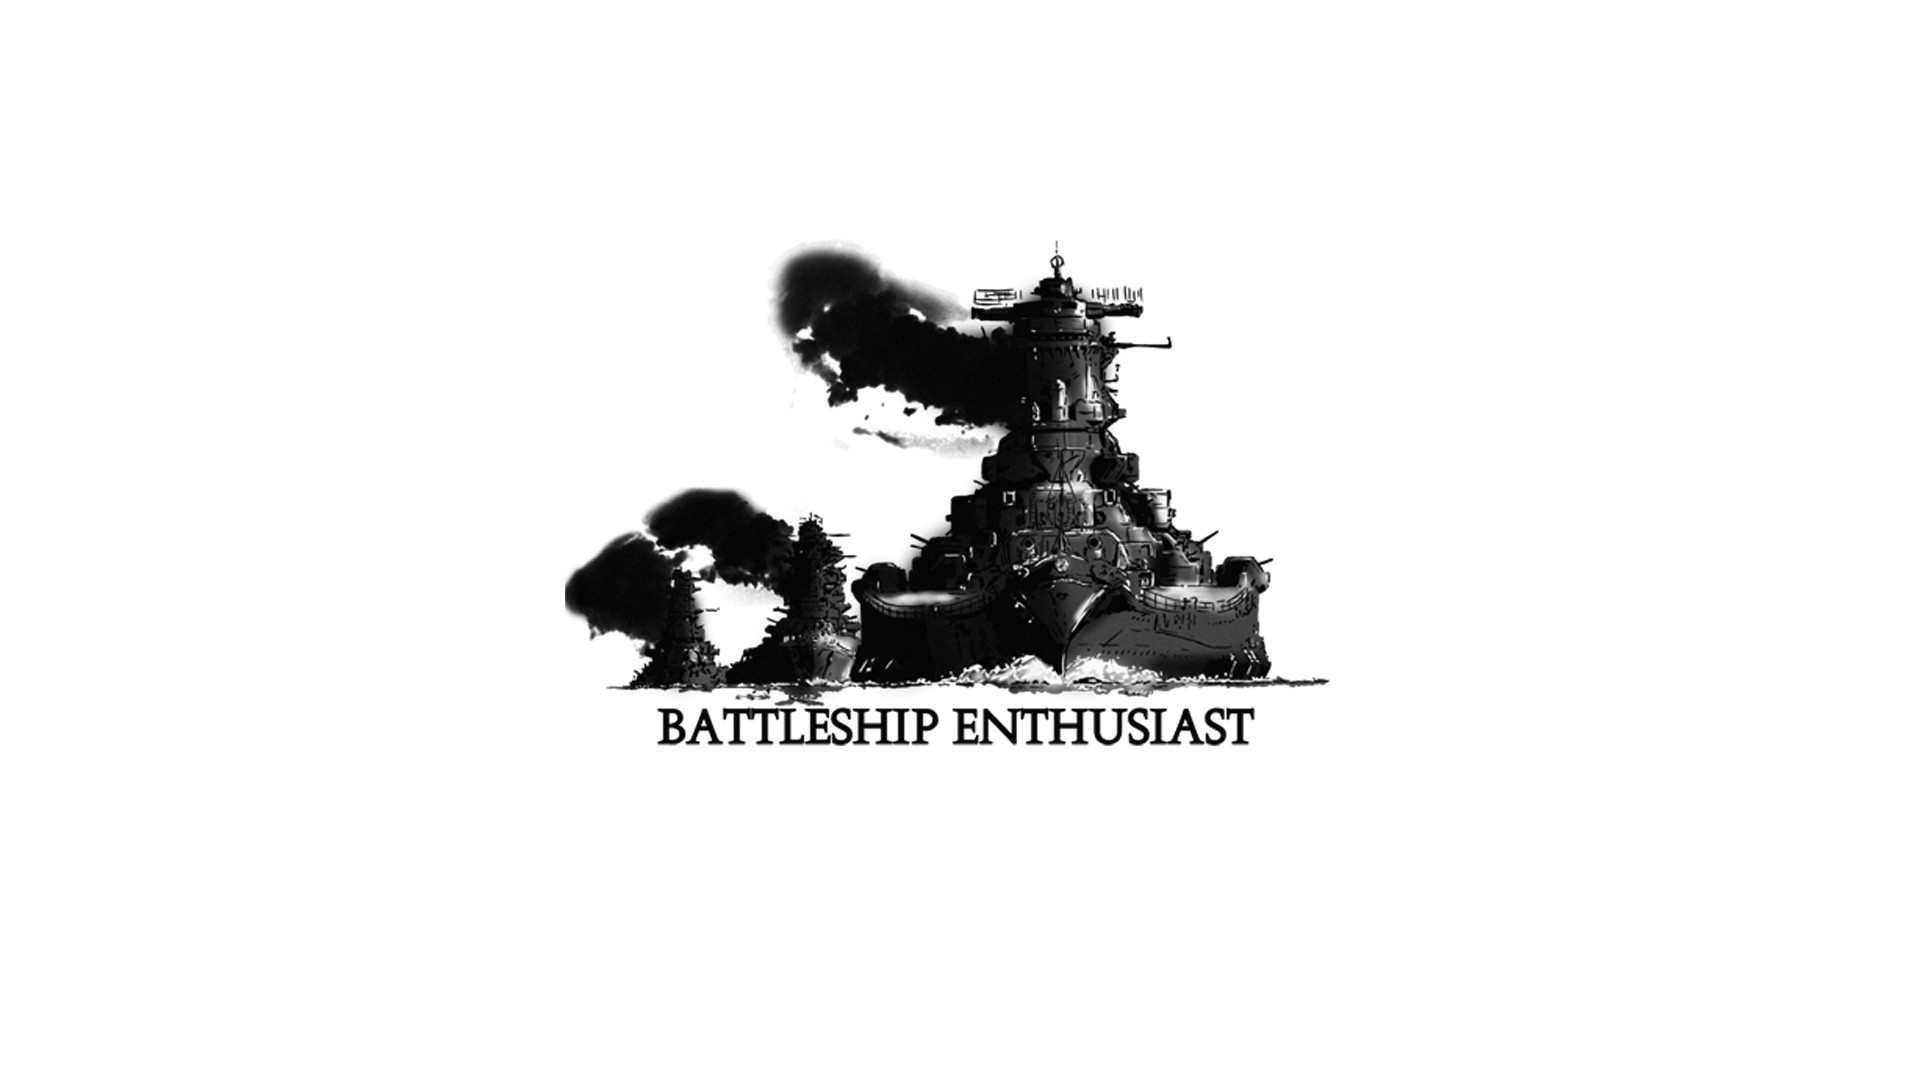 General 1920x1080 Battleships ship military simple background monochrome vehicle warship minimalism military vehicle white background DeviantArt typography